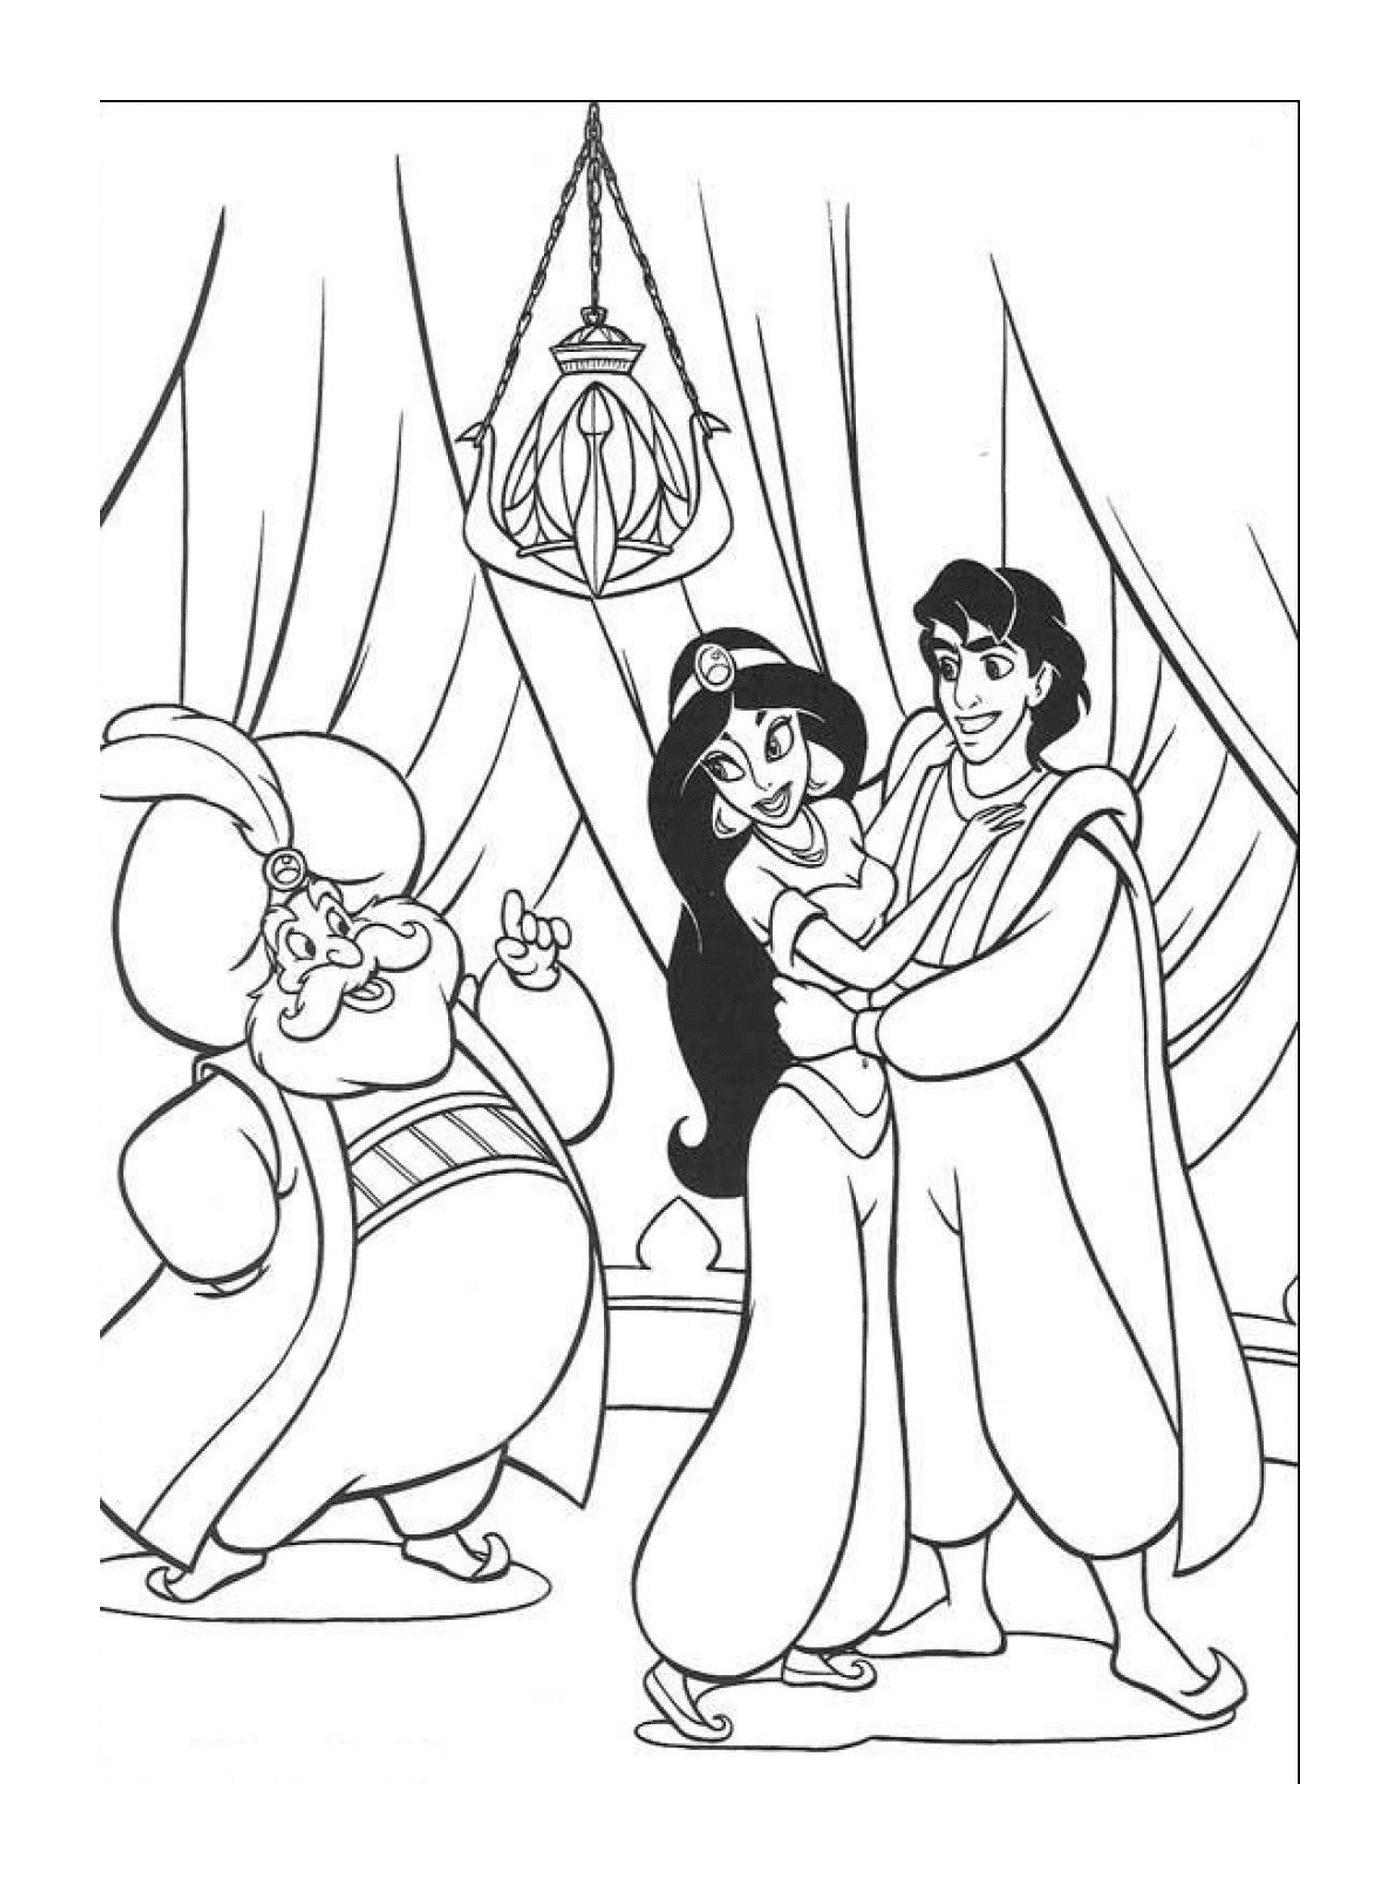   Aladdin dansant avec Jasmine 